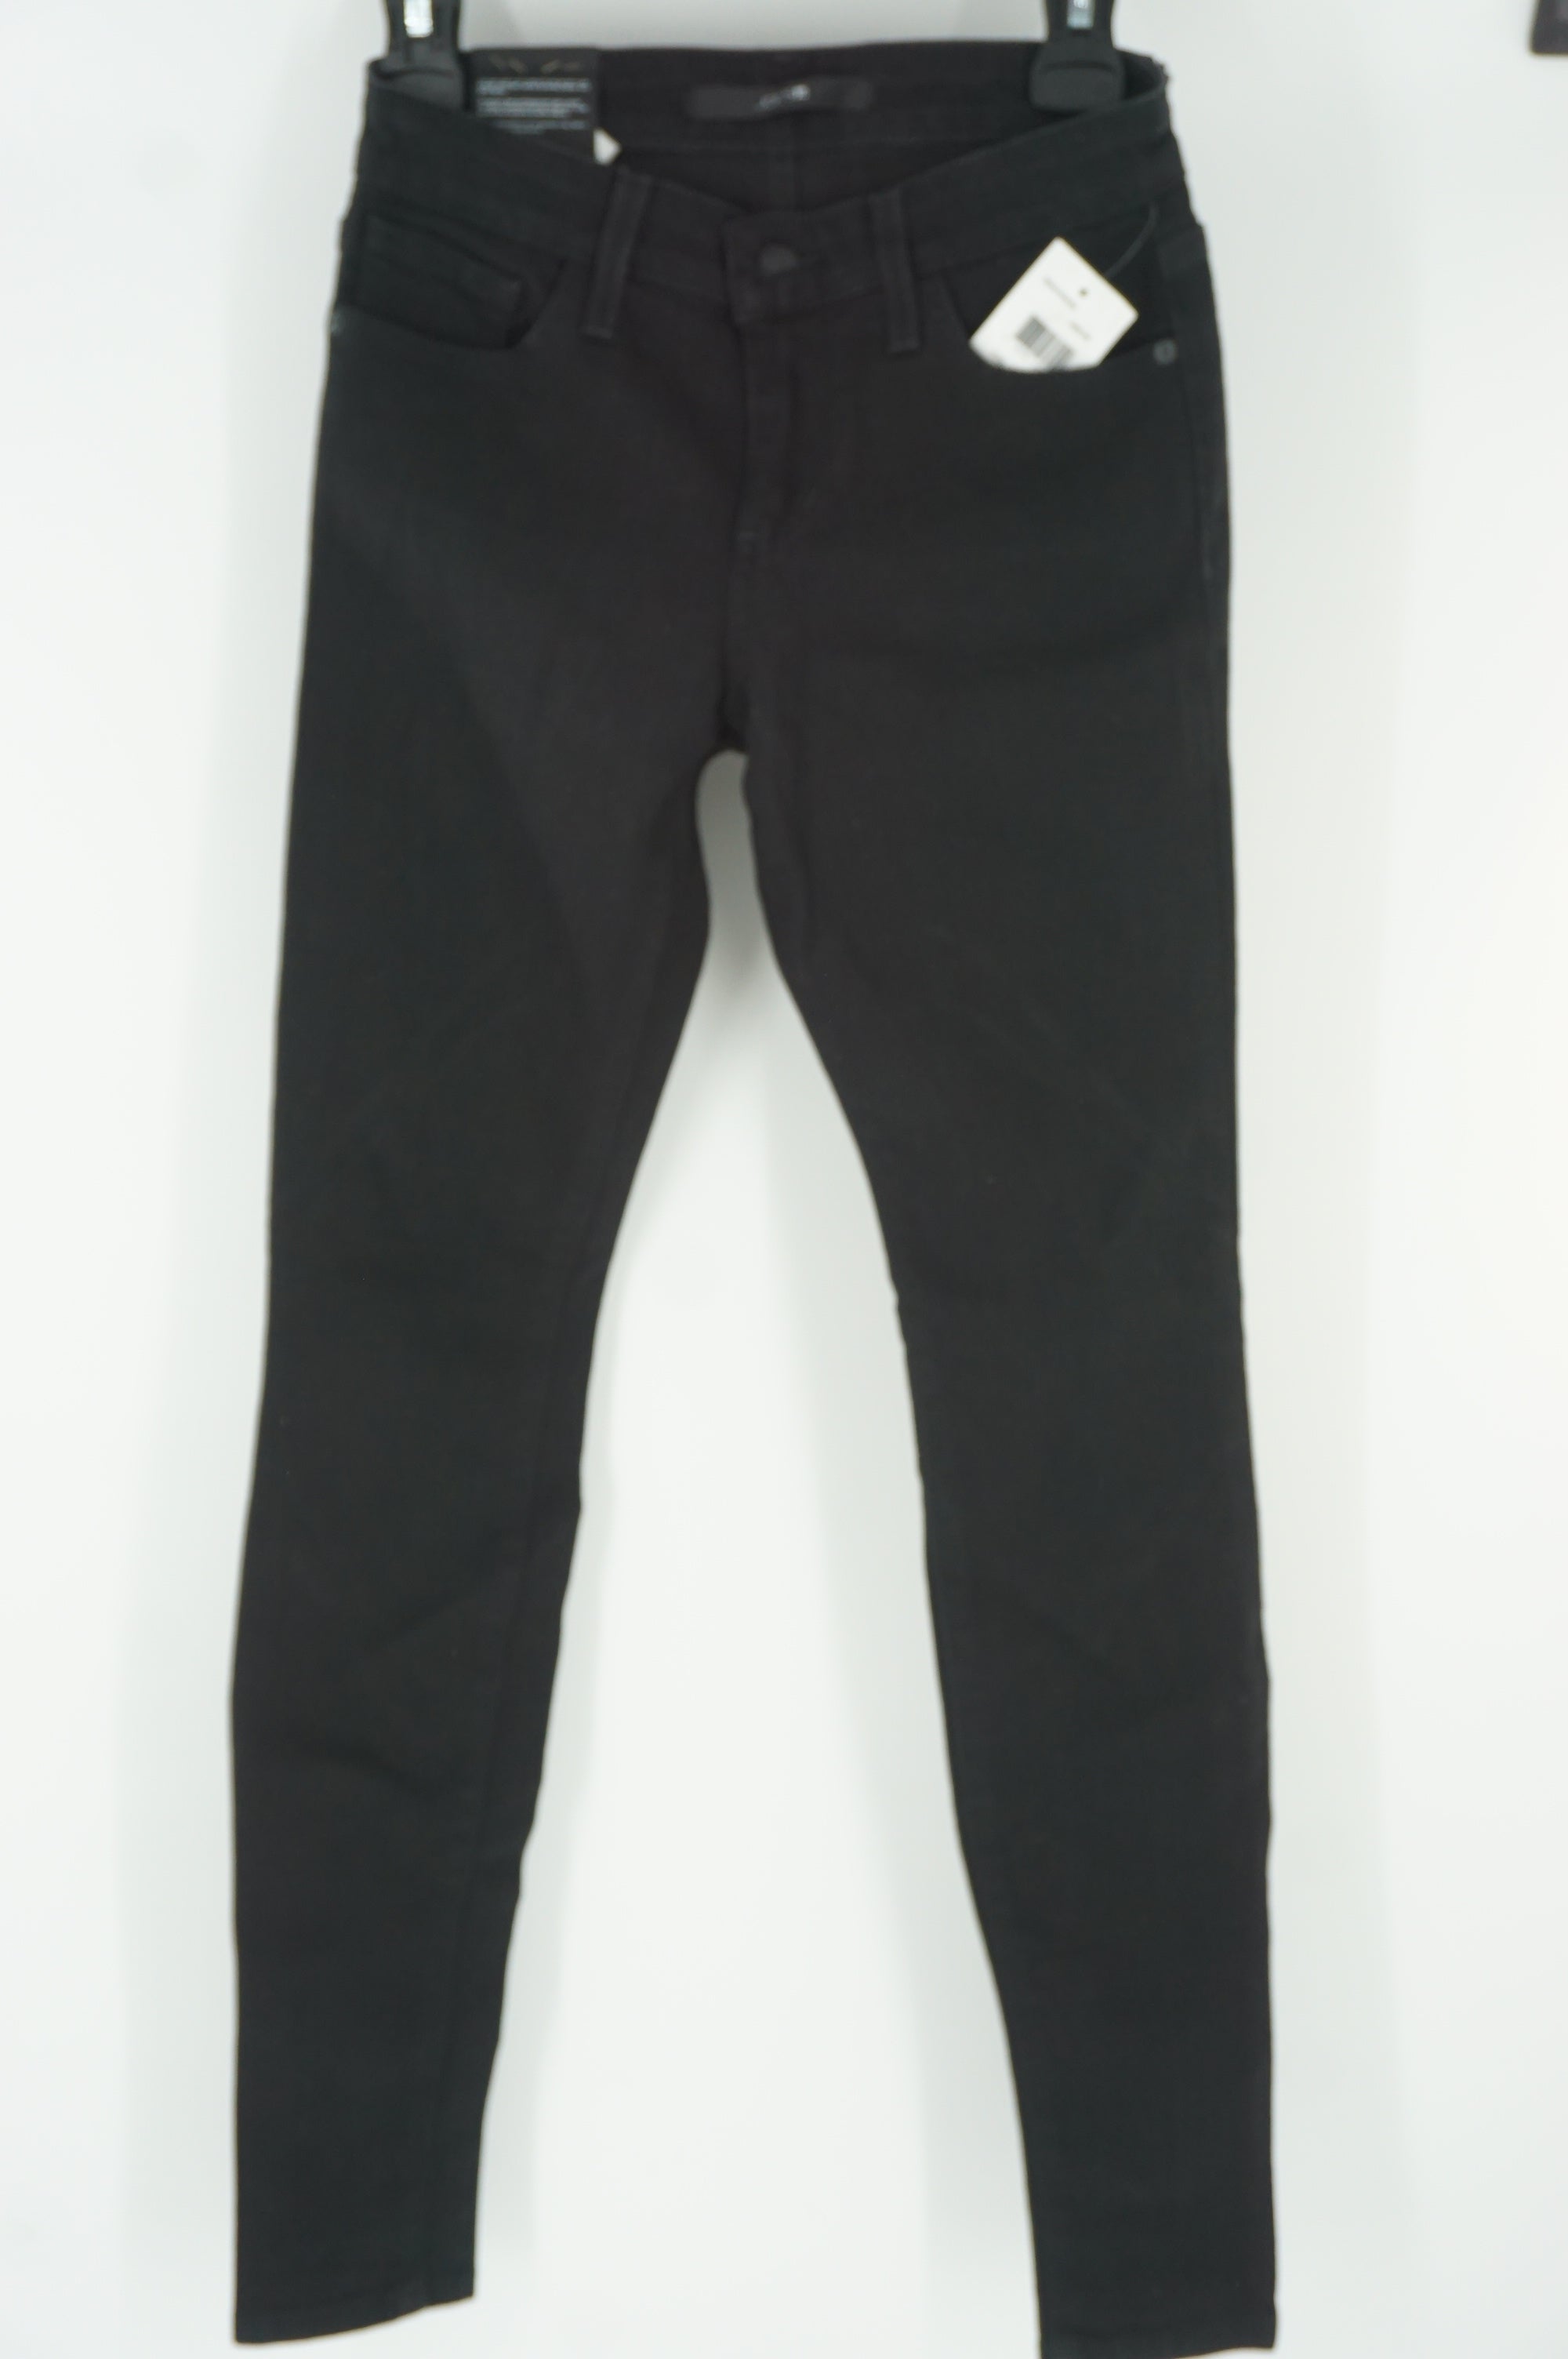 Joe's Jeans Black Denim Skinny Pants size 25 NWT $169